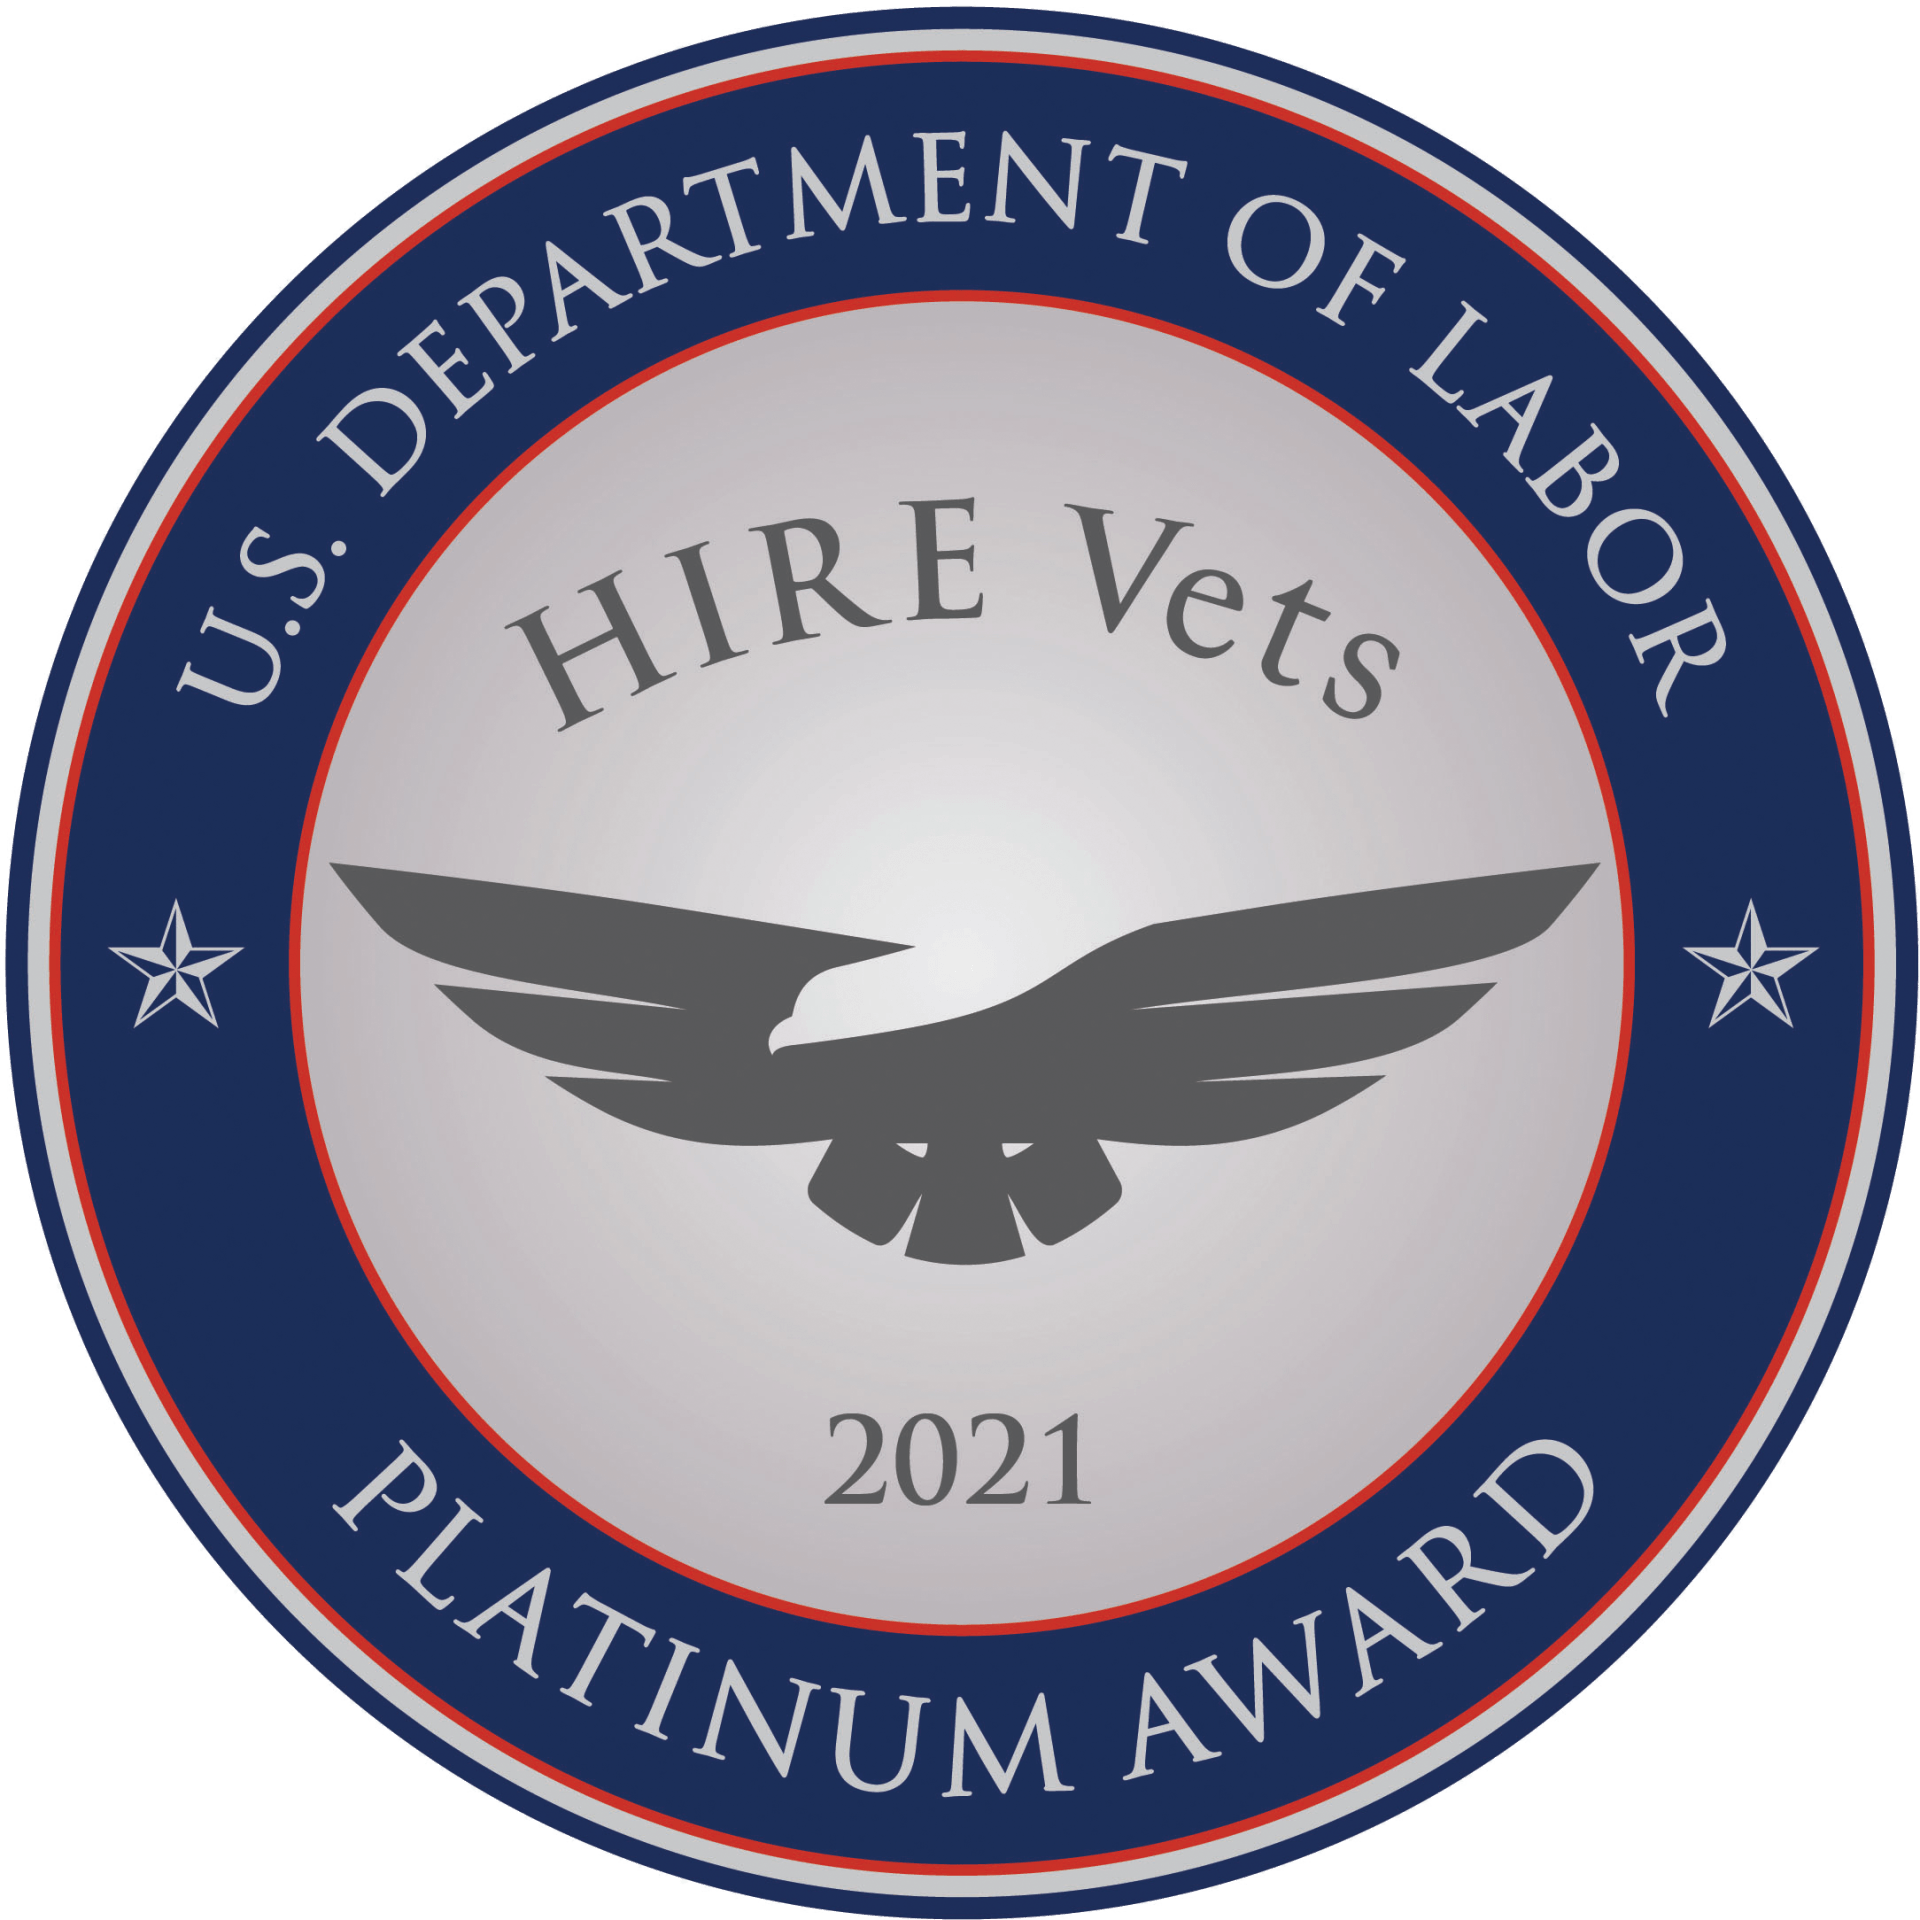 Hire Vets Platinum Award medallion image